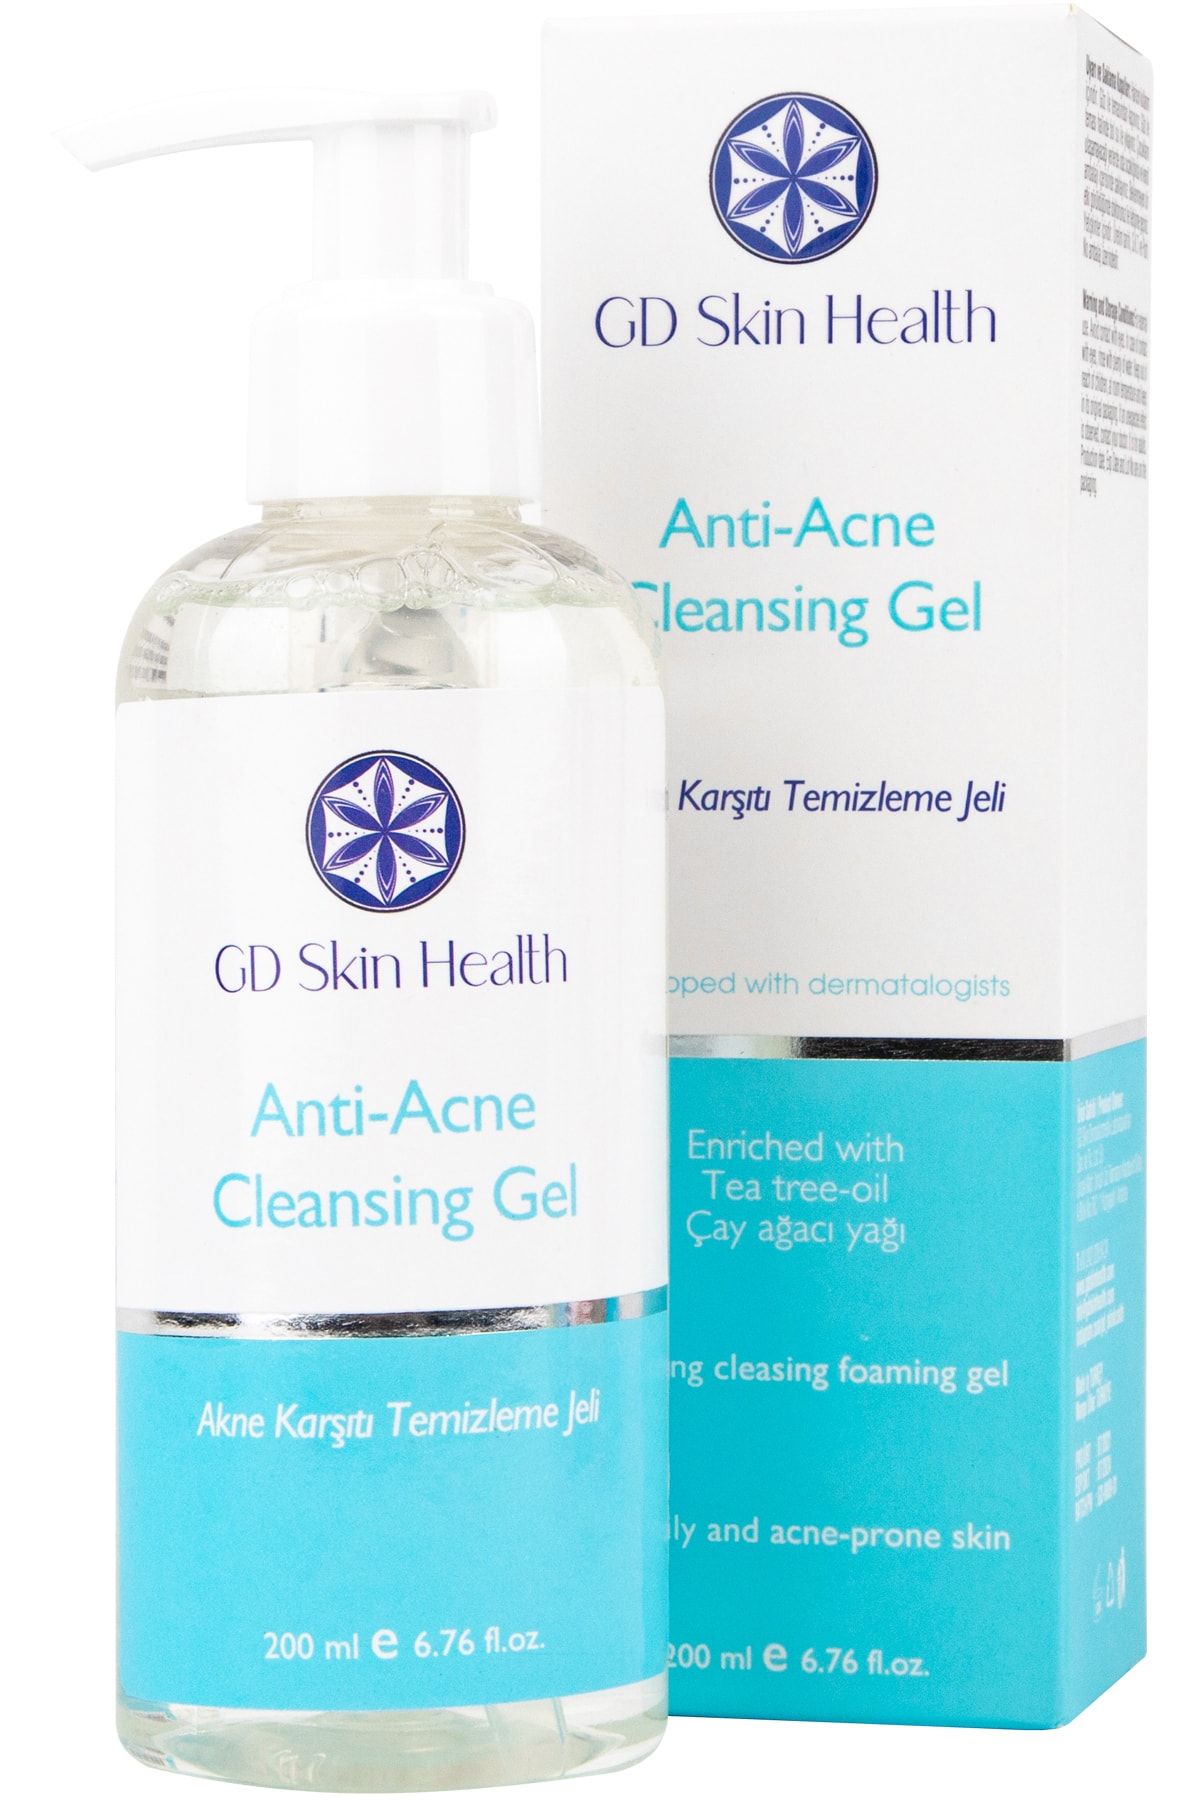 GD skin Health Anti-acne Cleansing Gel Akne Karşıtı Temizleme Jeli Enriched With Tea Tree-oil (çay Ağacı Yağı)